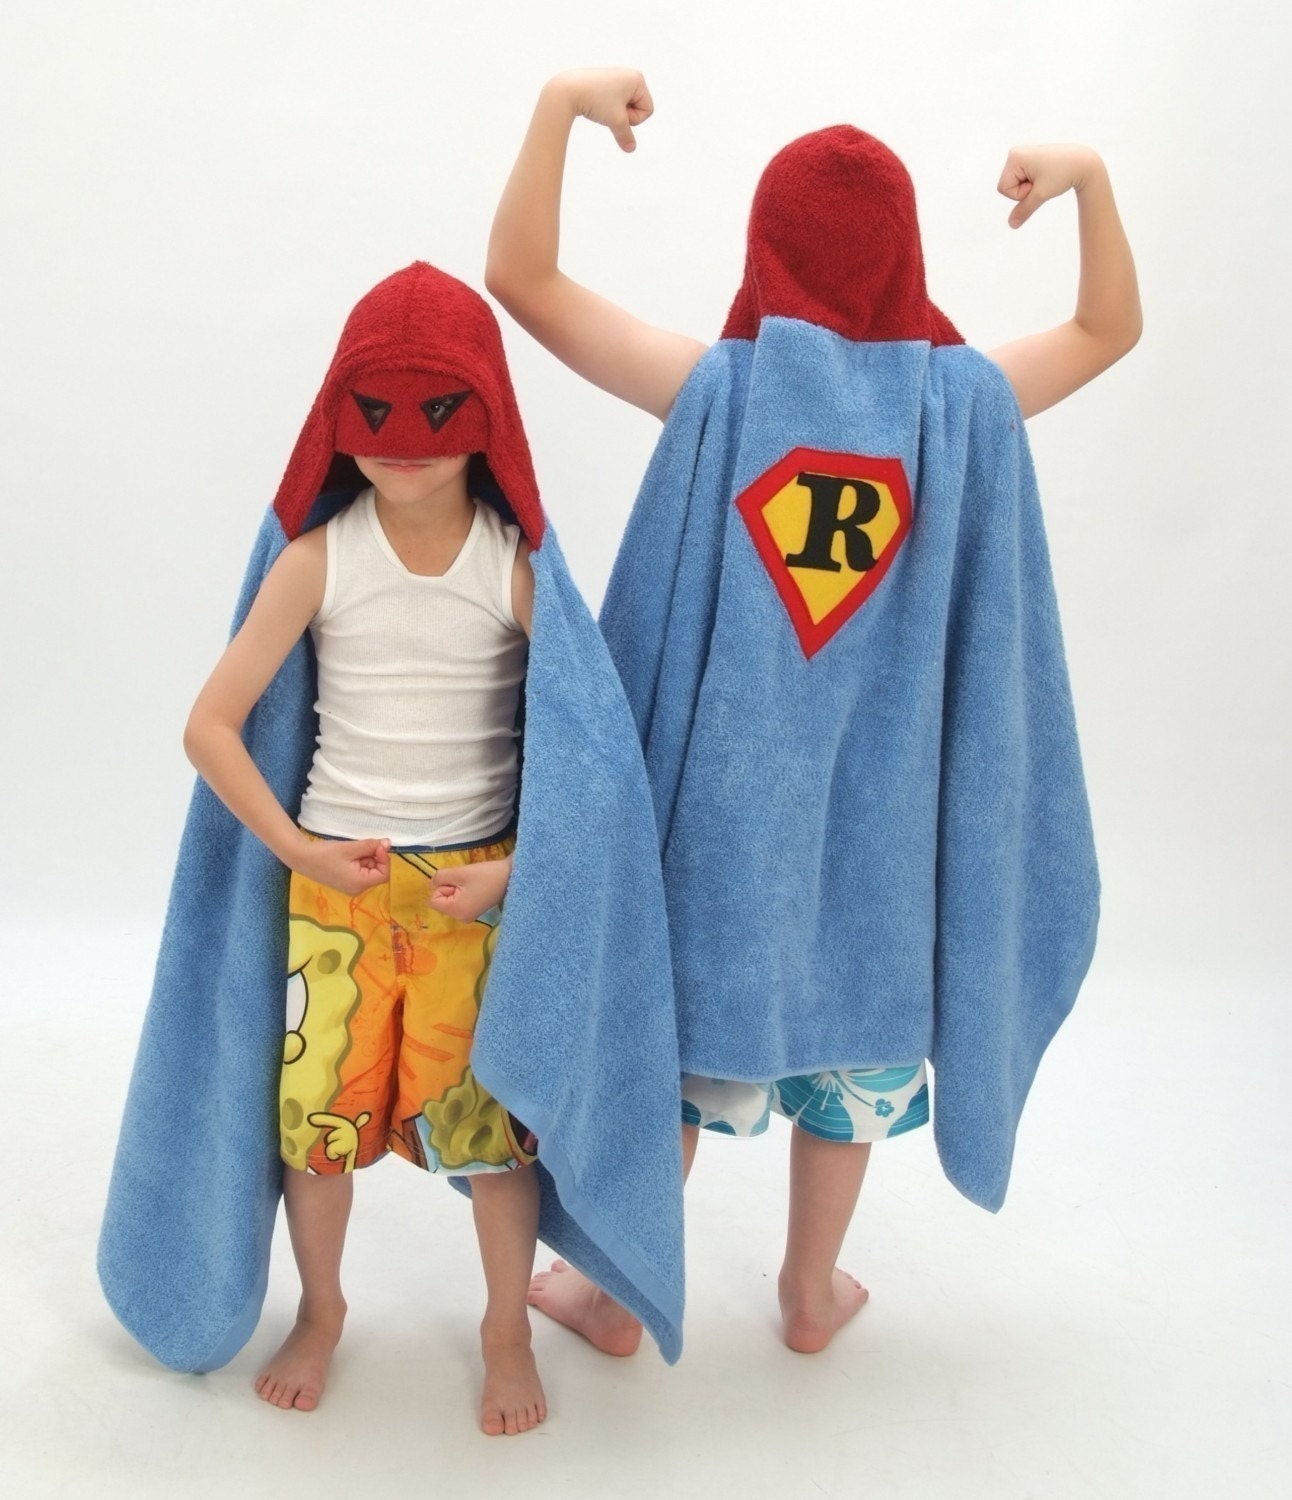 Personalized Superhero towel